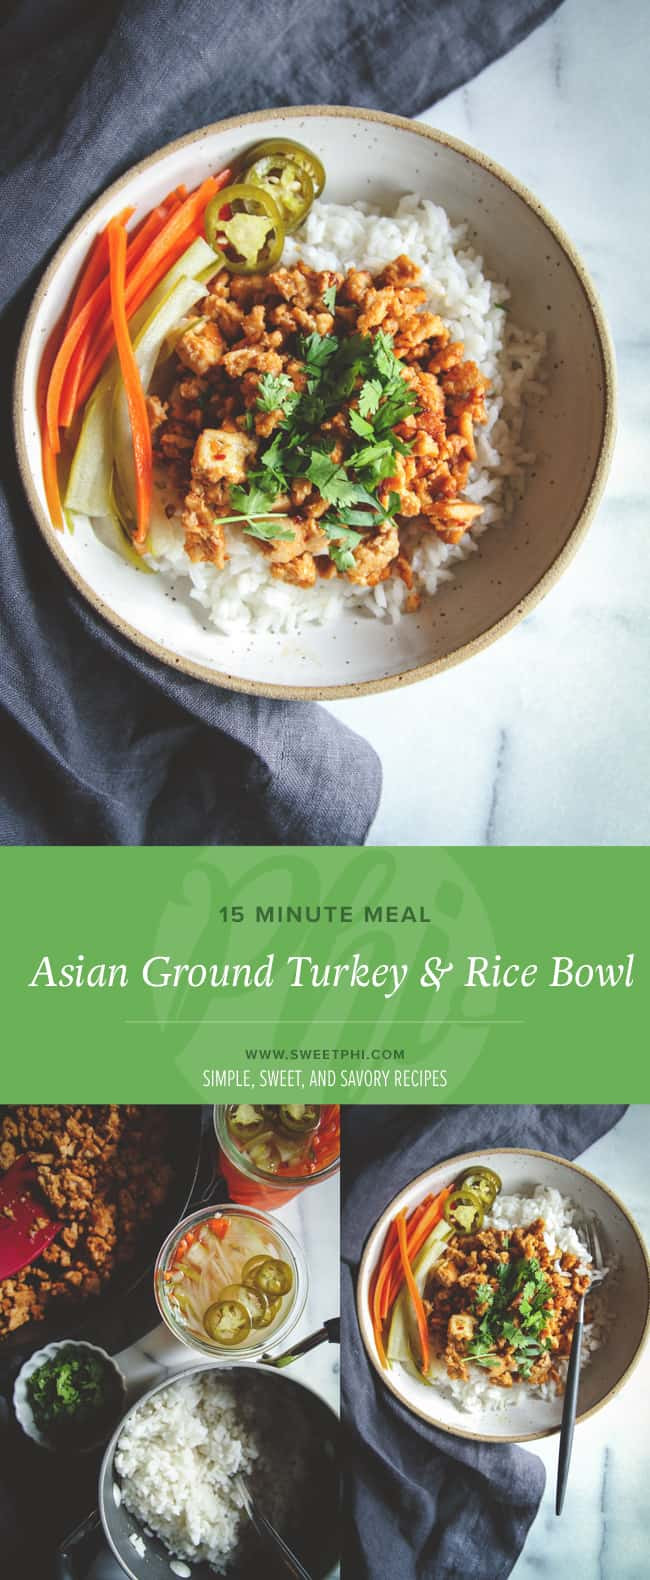 Asian Ground Turkey Recipes
 Asian Ground Turkey and Rice Bowls Recipe Sweetphi